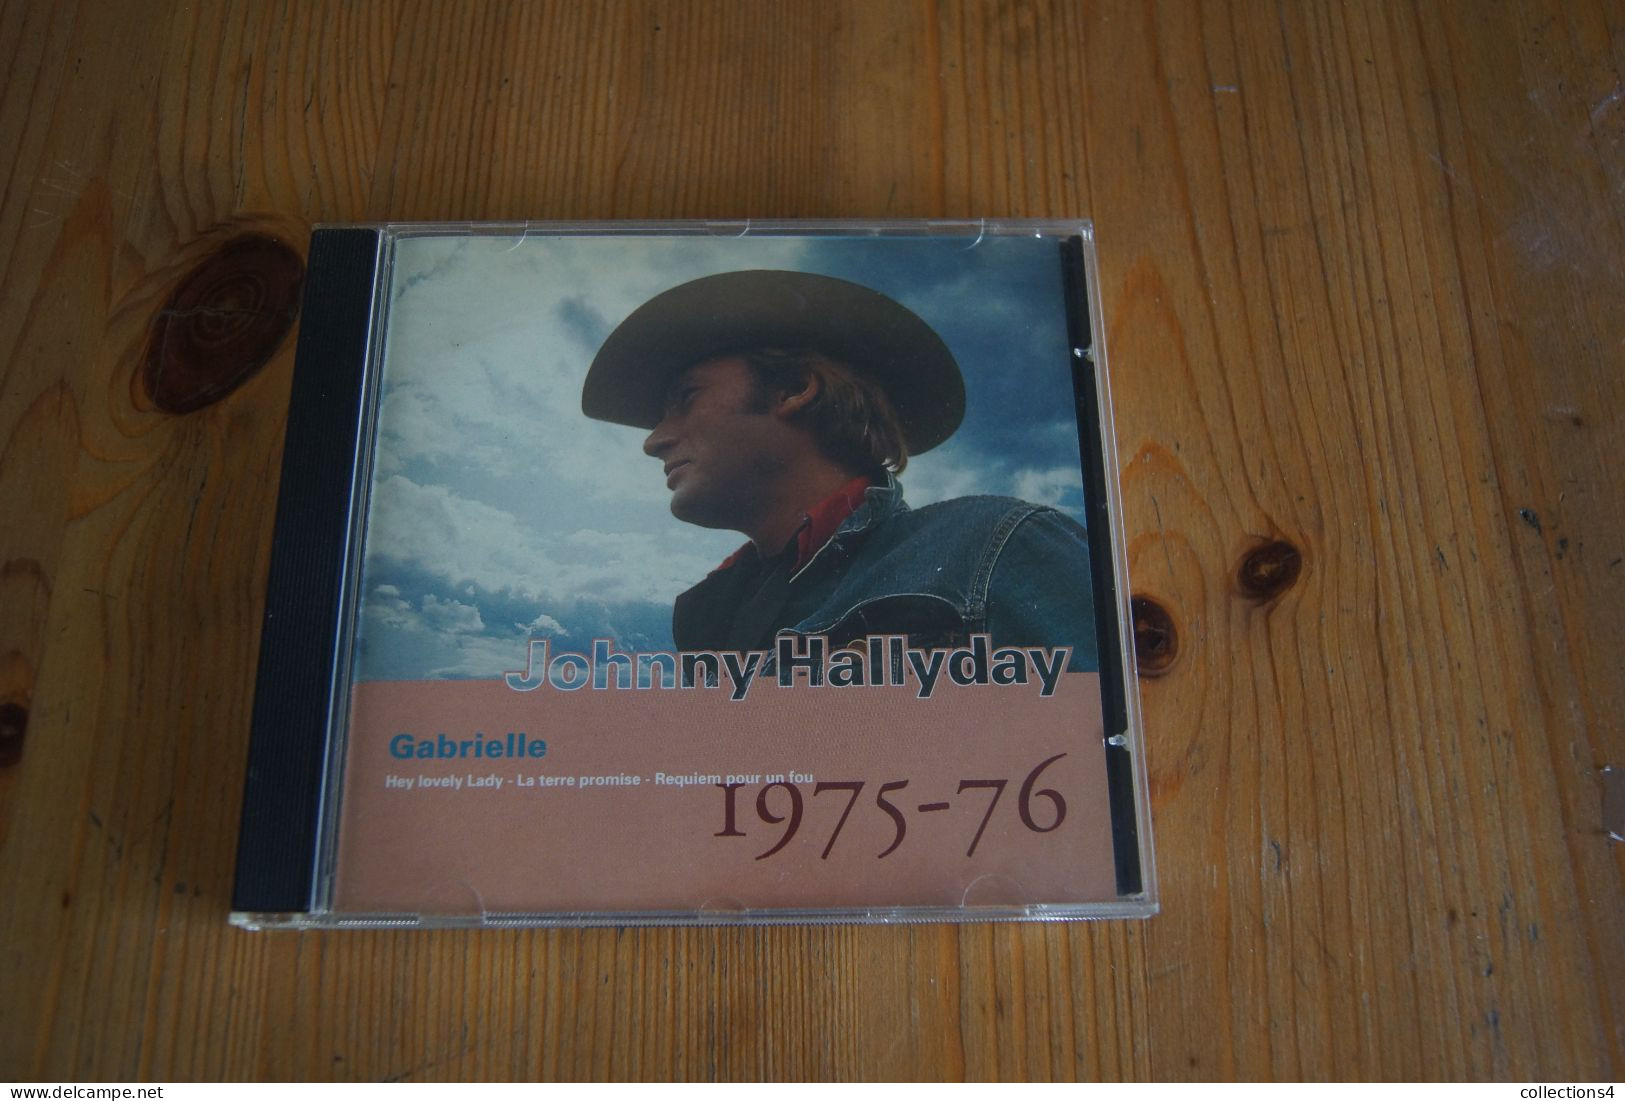 JOHNNY HALLYDAY GABRIELLE 1975-76  CD  SORTIE 1993 LIMITED EDITION VALEUR+ - Rock